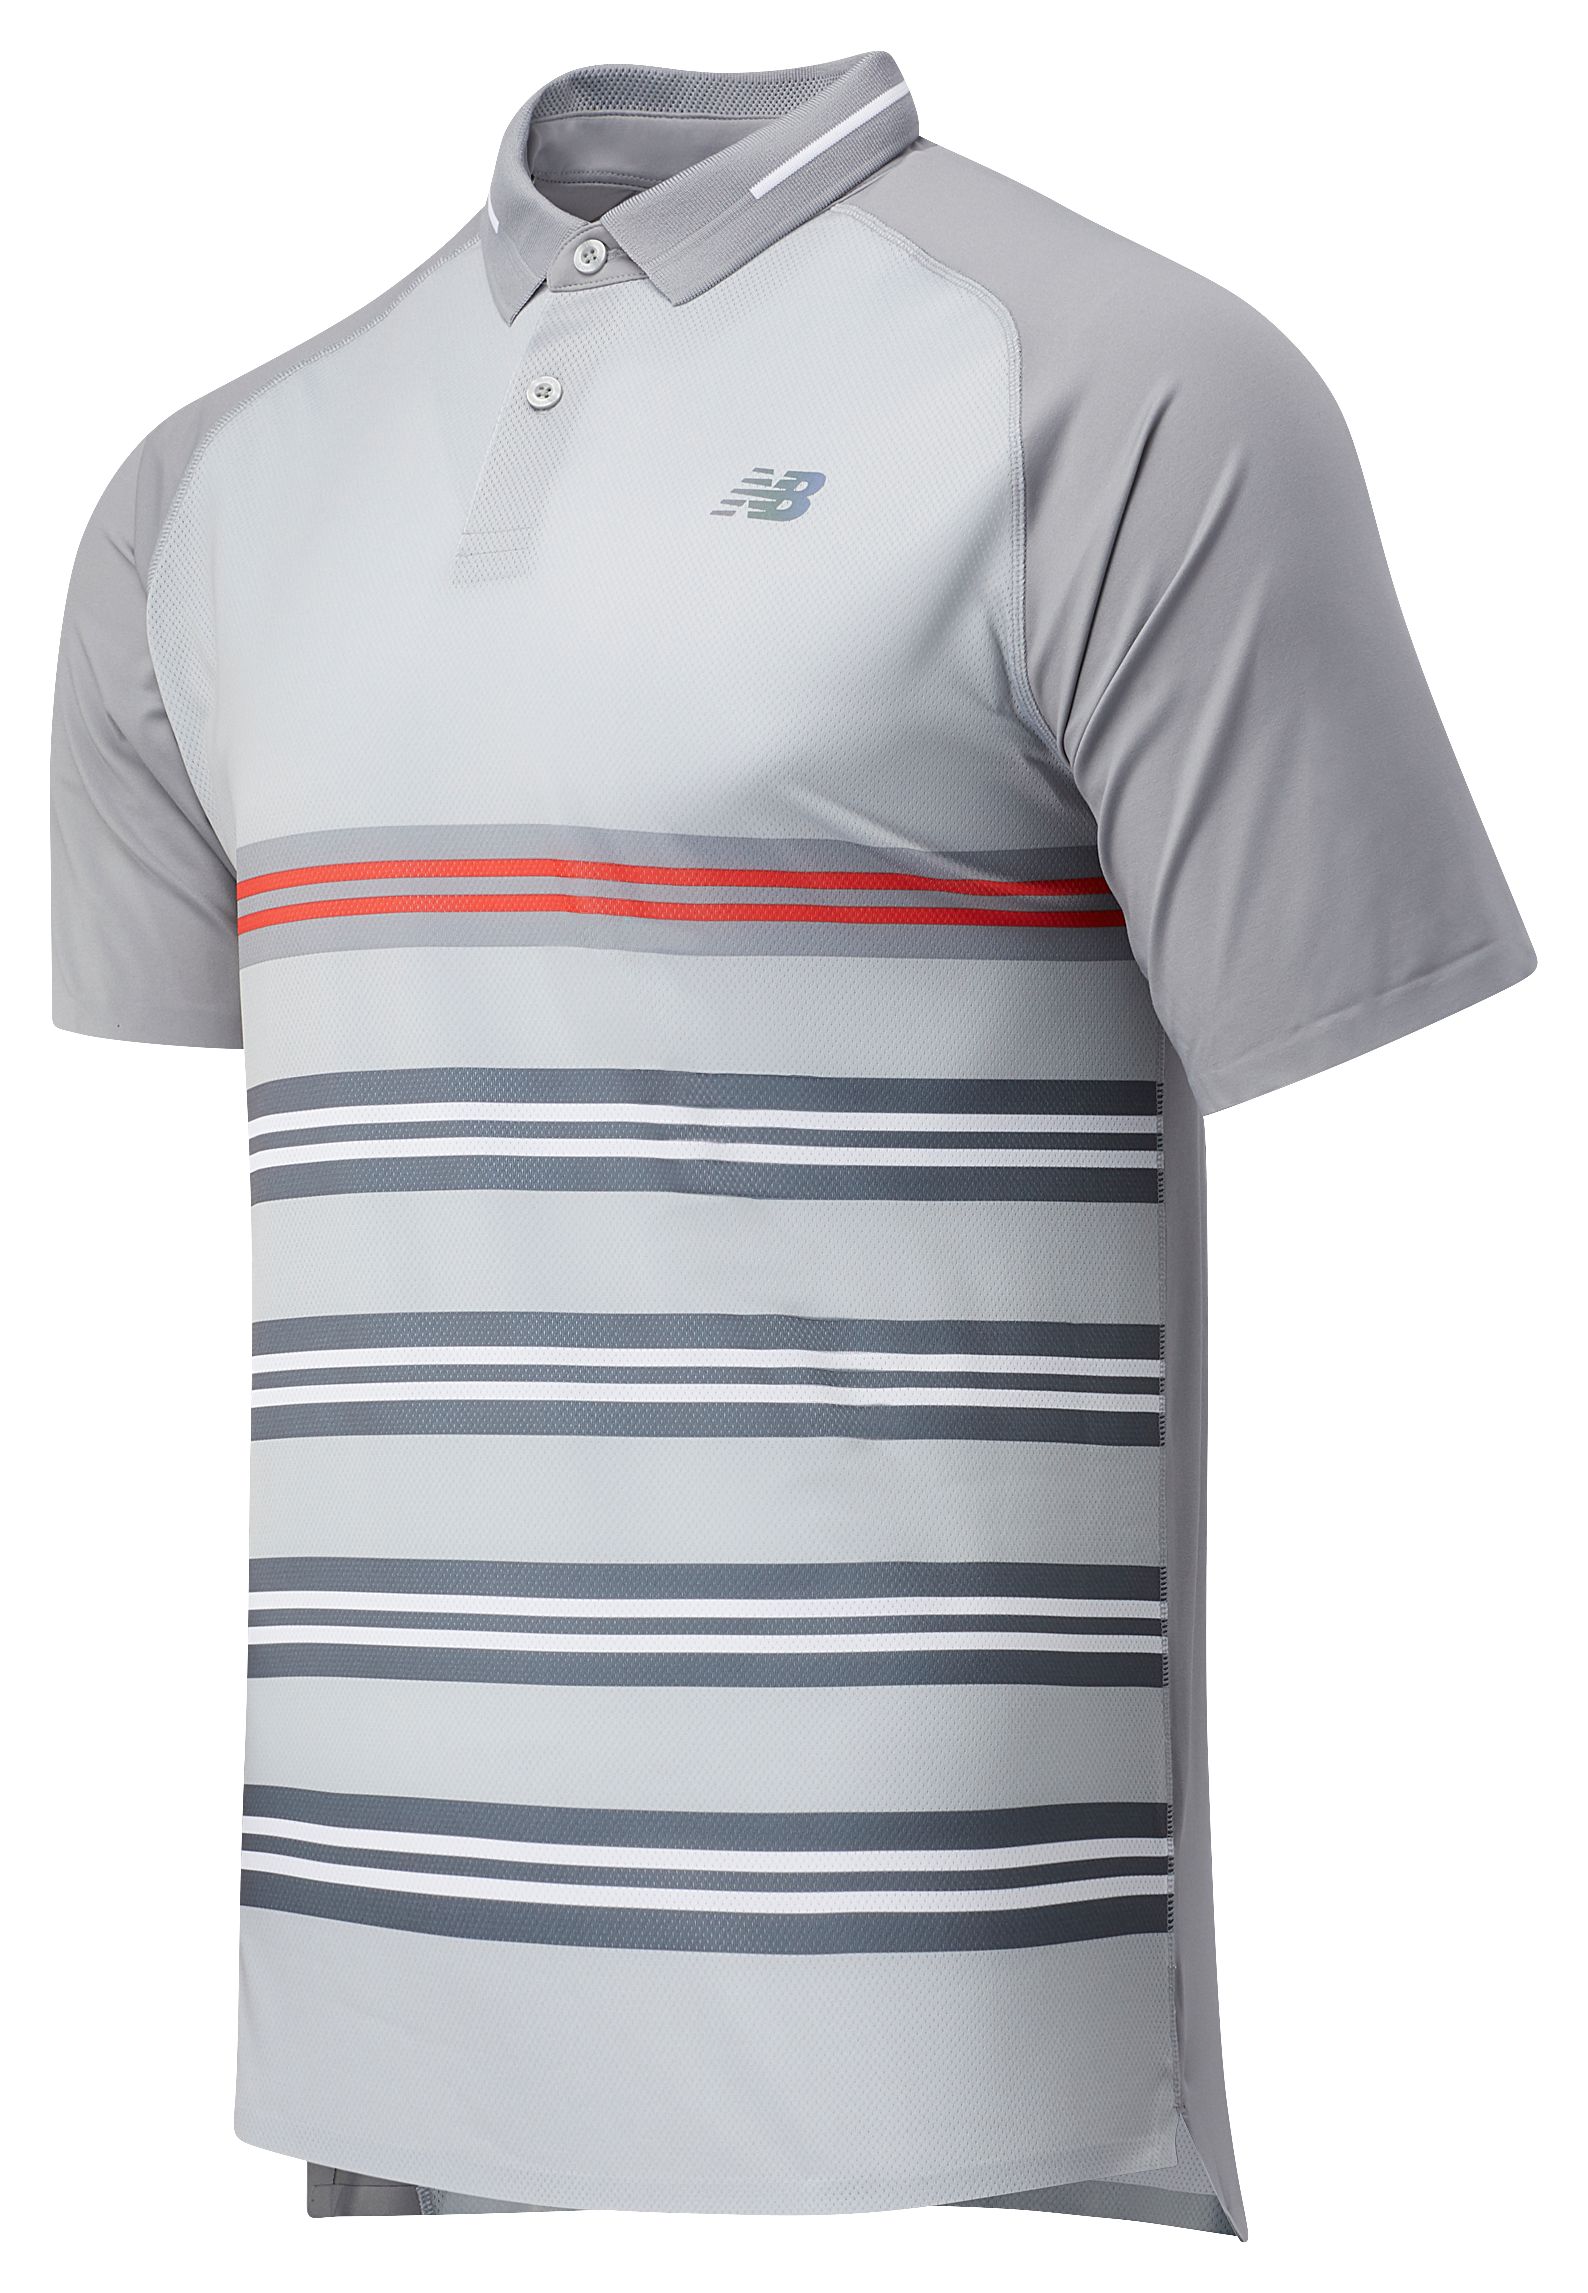 Men's Printed Tournament Polo T-Shirt - New Balance